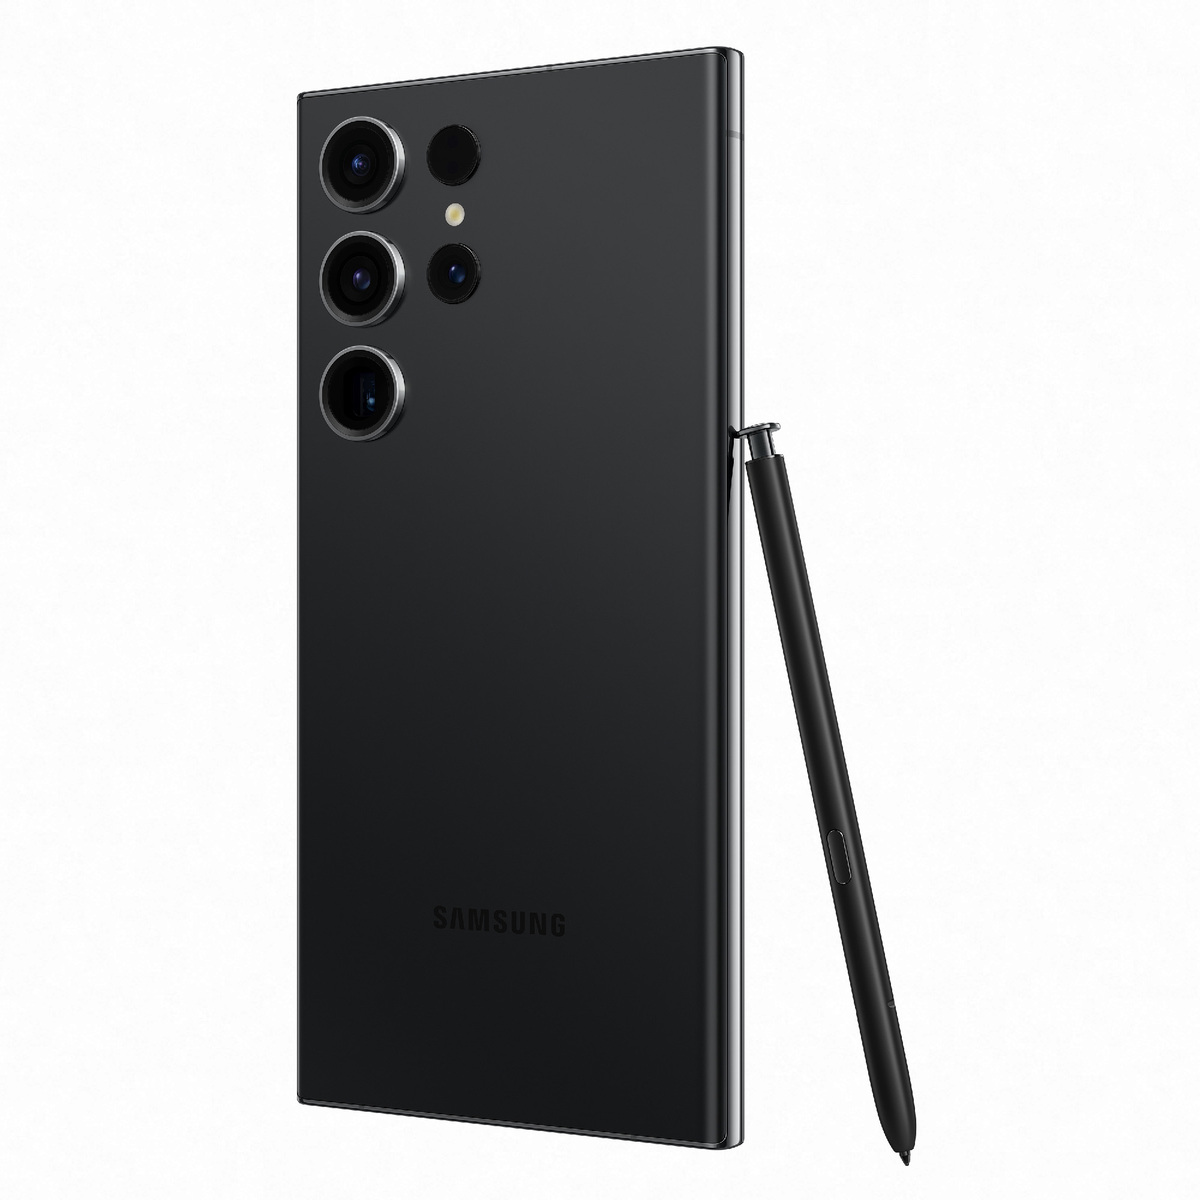 Samsung Galaxy S23 Ultra Dual SIM 512 GB phantom black 12 GB RAM